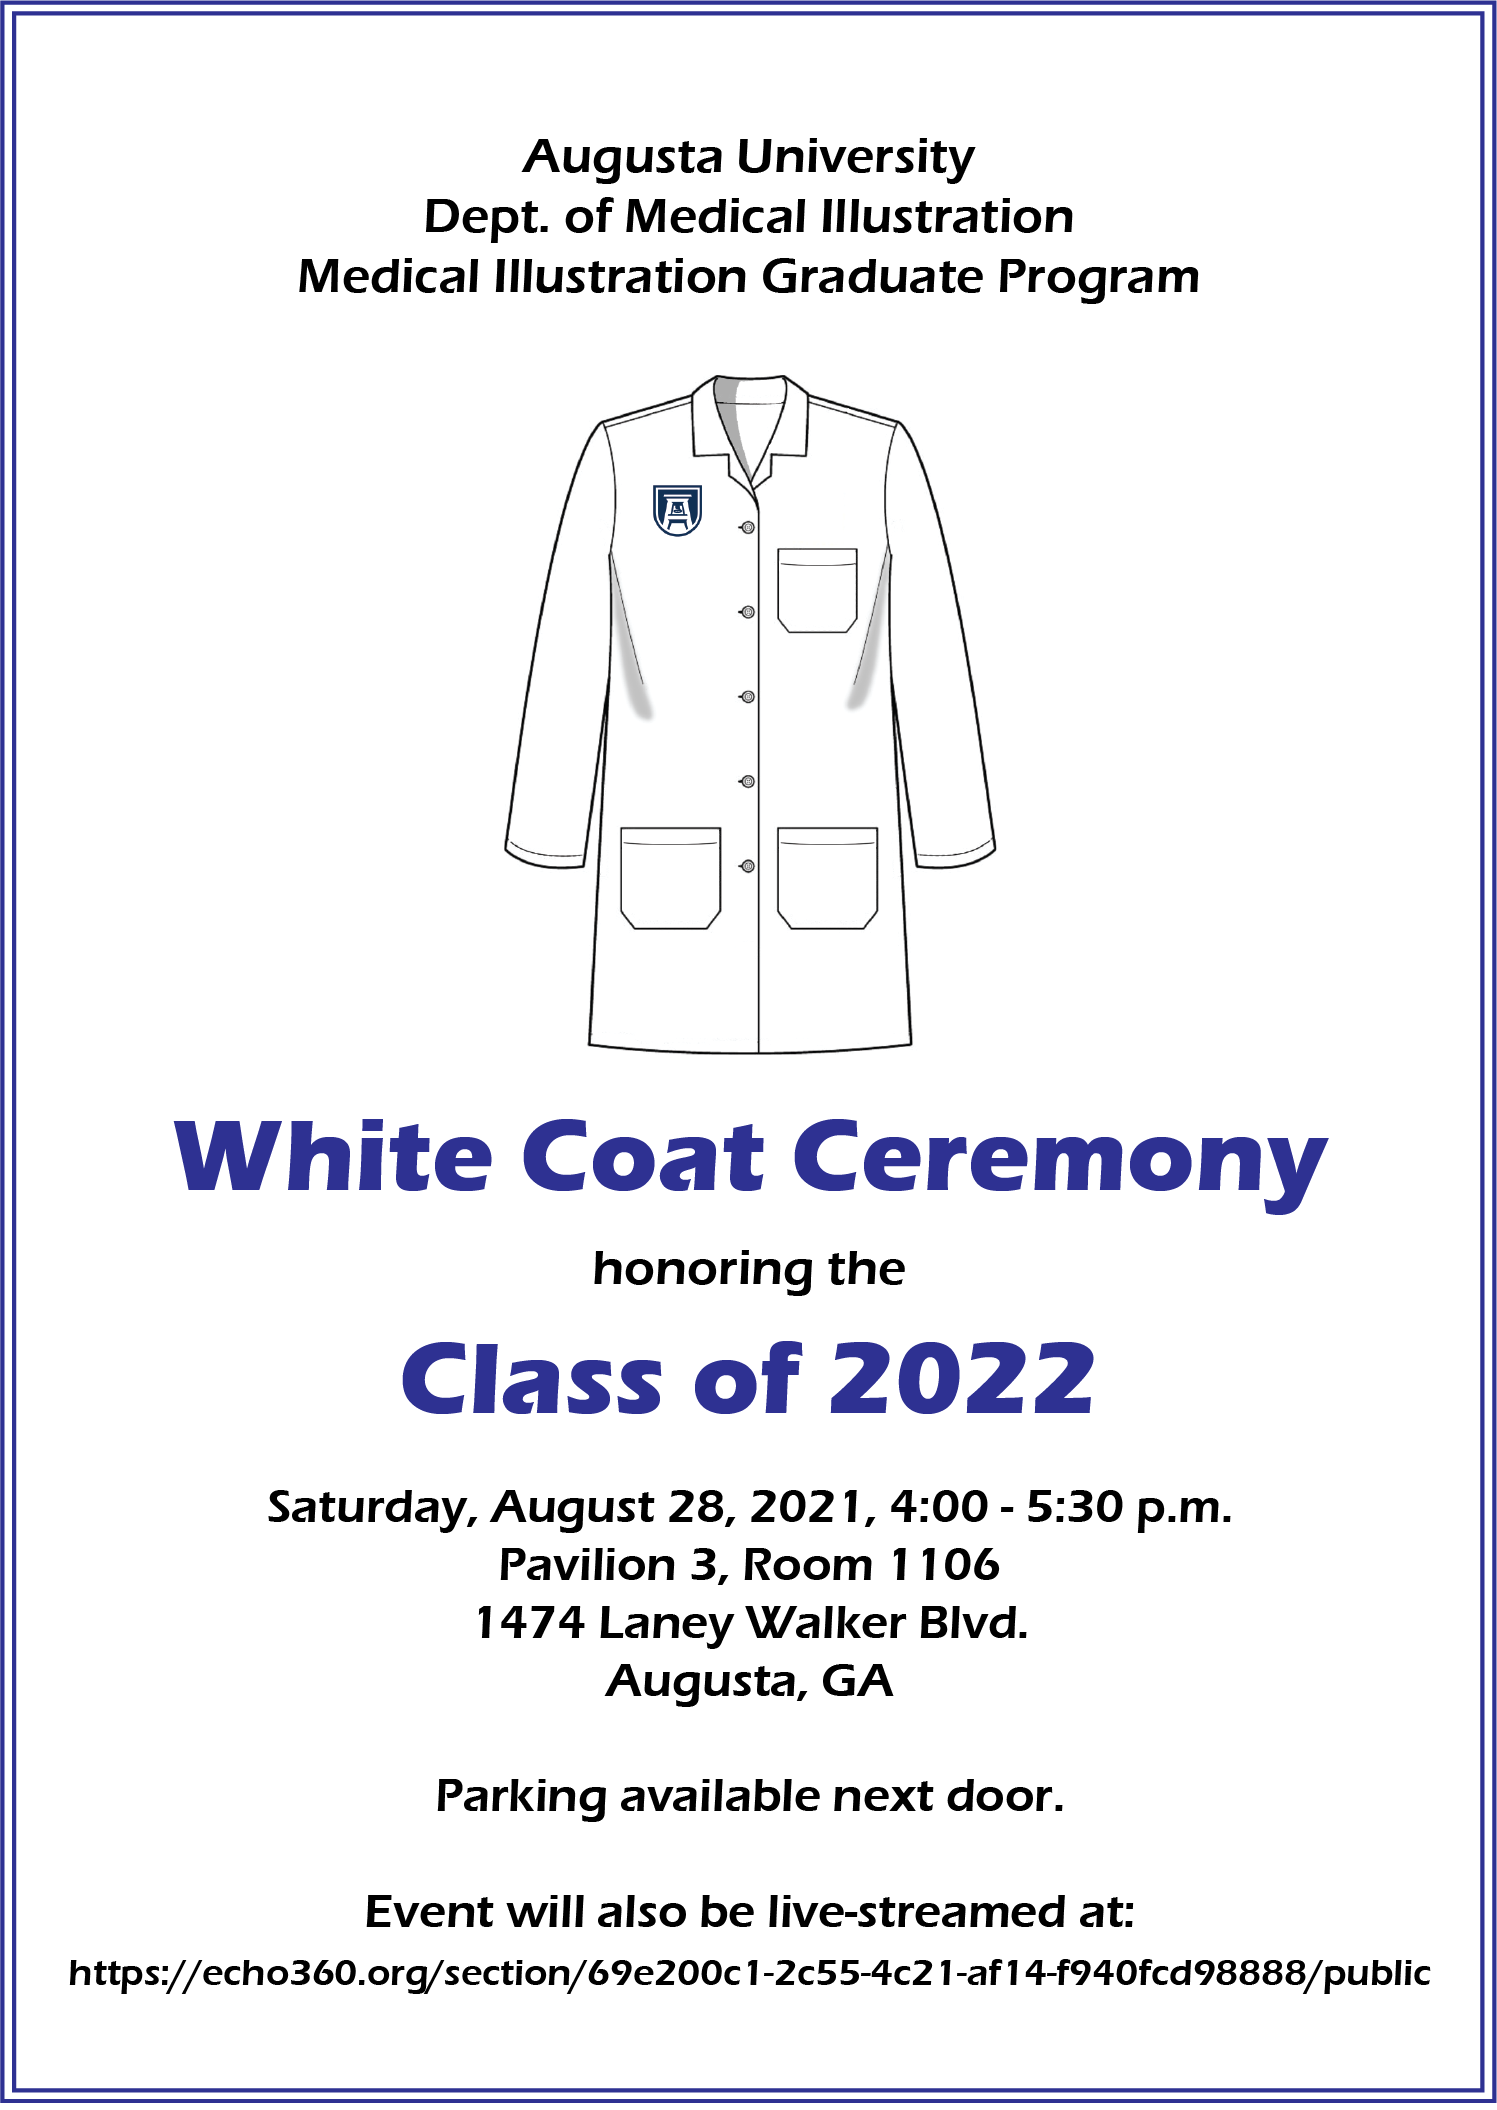 Invitation to white coat ceremony on August 28, 2021 at 4:00 p.m. in Pavilion 3, room 1106, 1471 Laney-Walker Blvd., Augusta, GA.